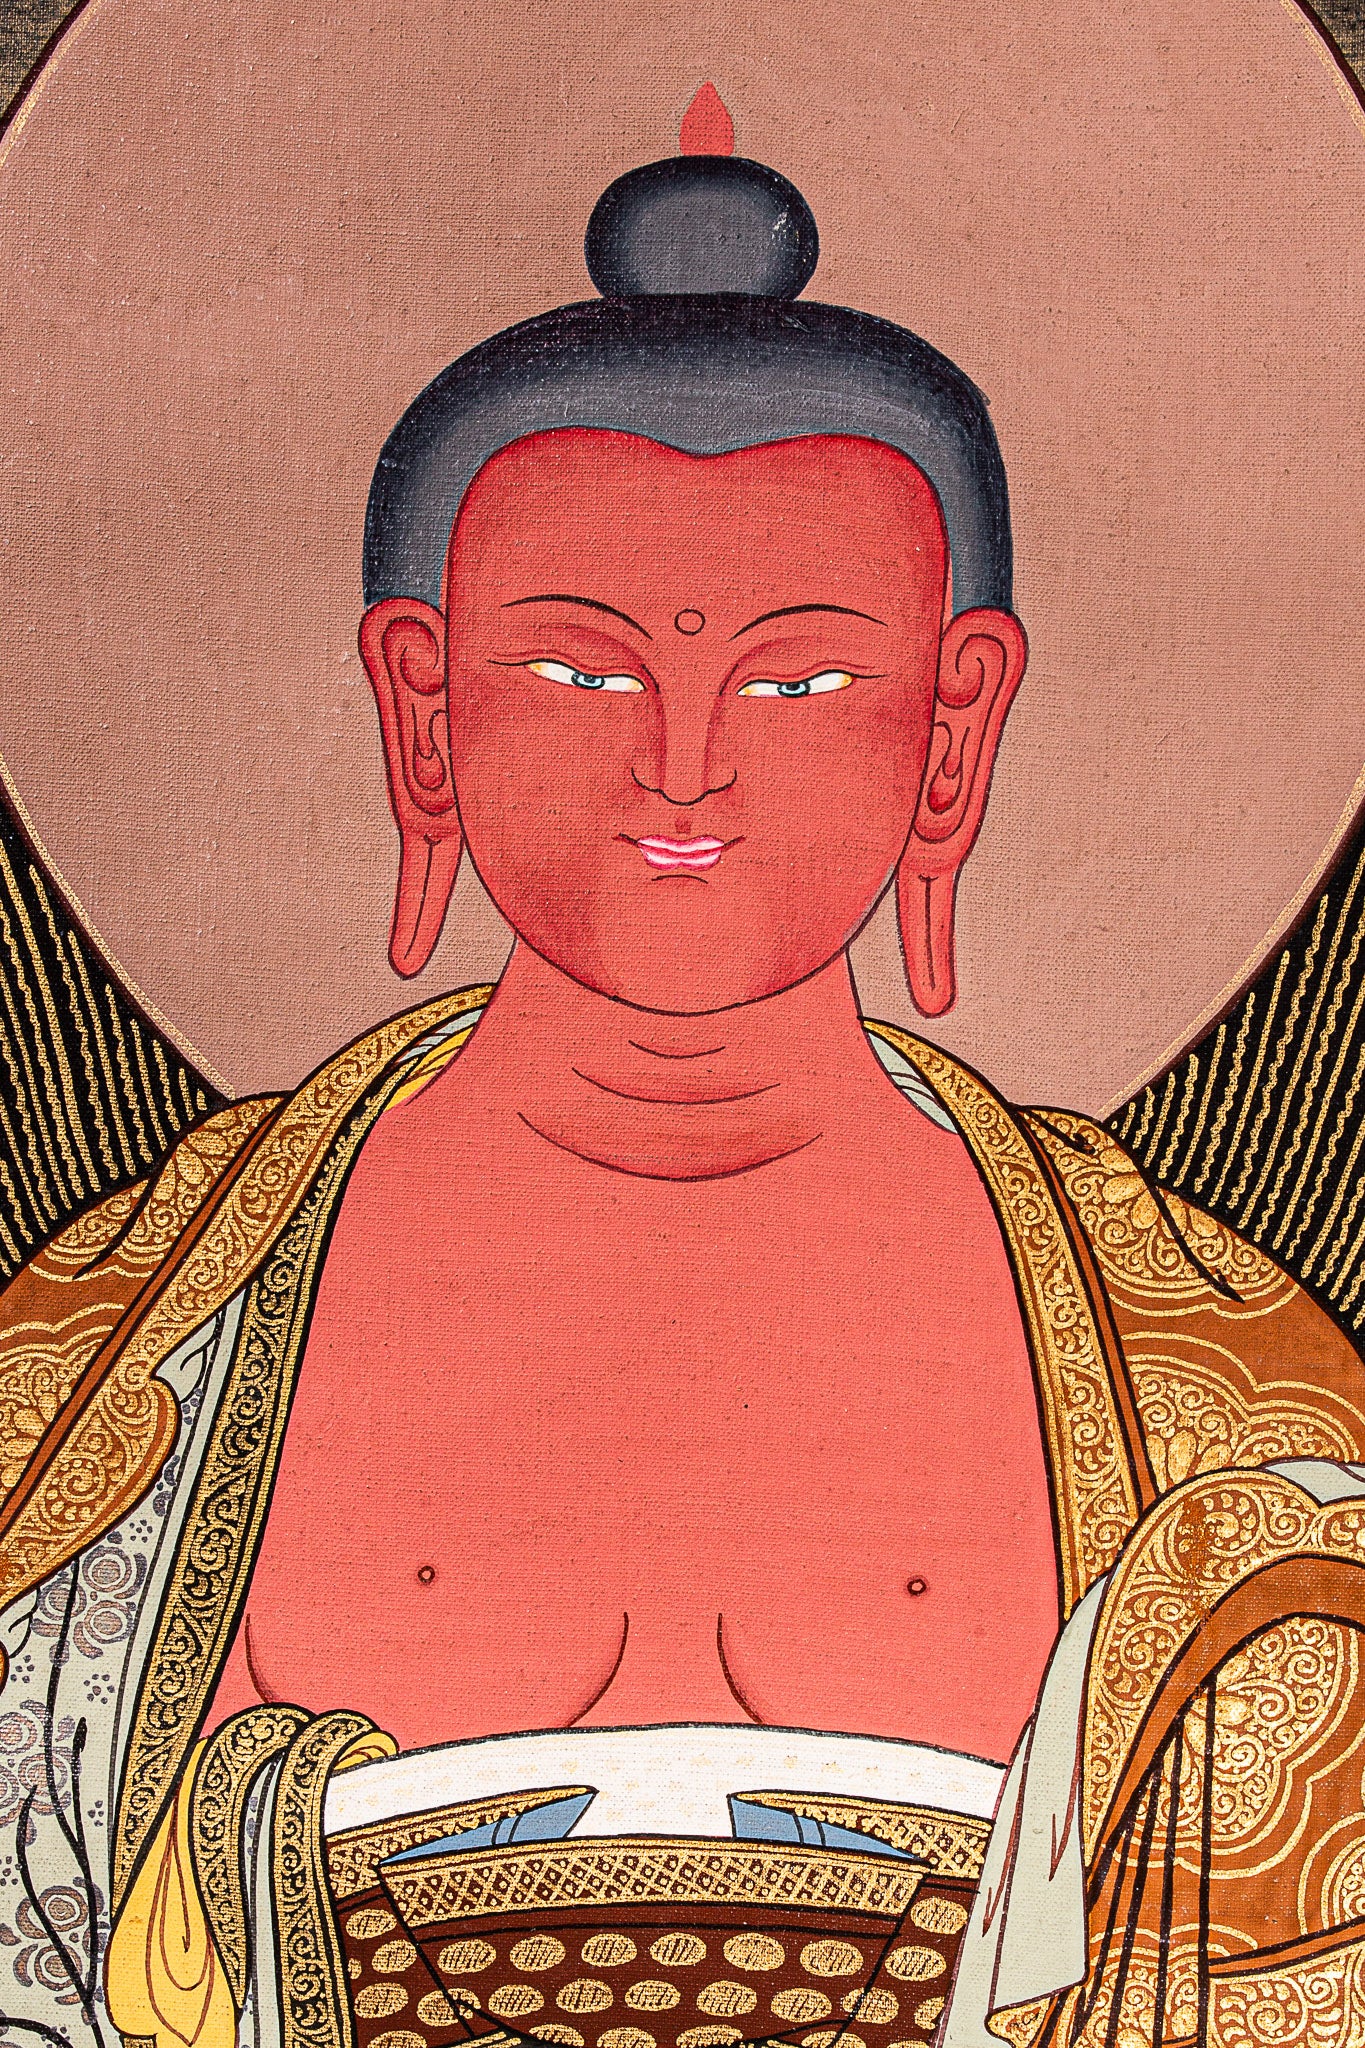 Handmade Thangka Painting of Amitabha Buddha for religious and spiritual practices.